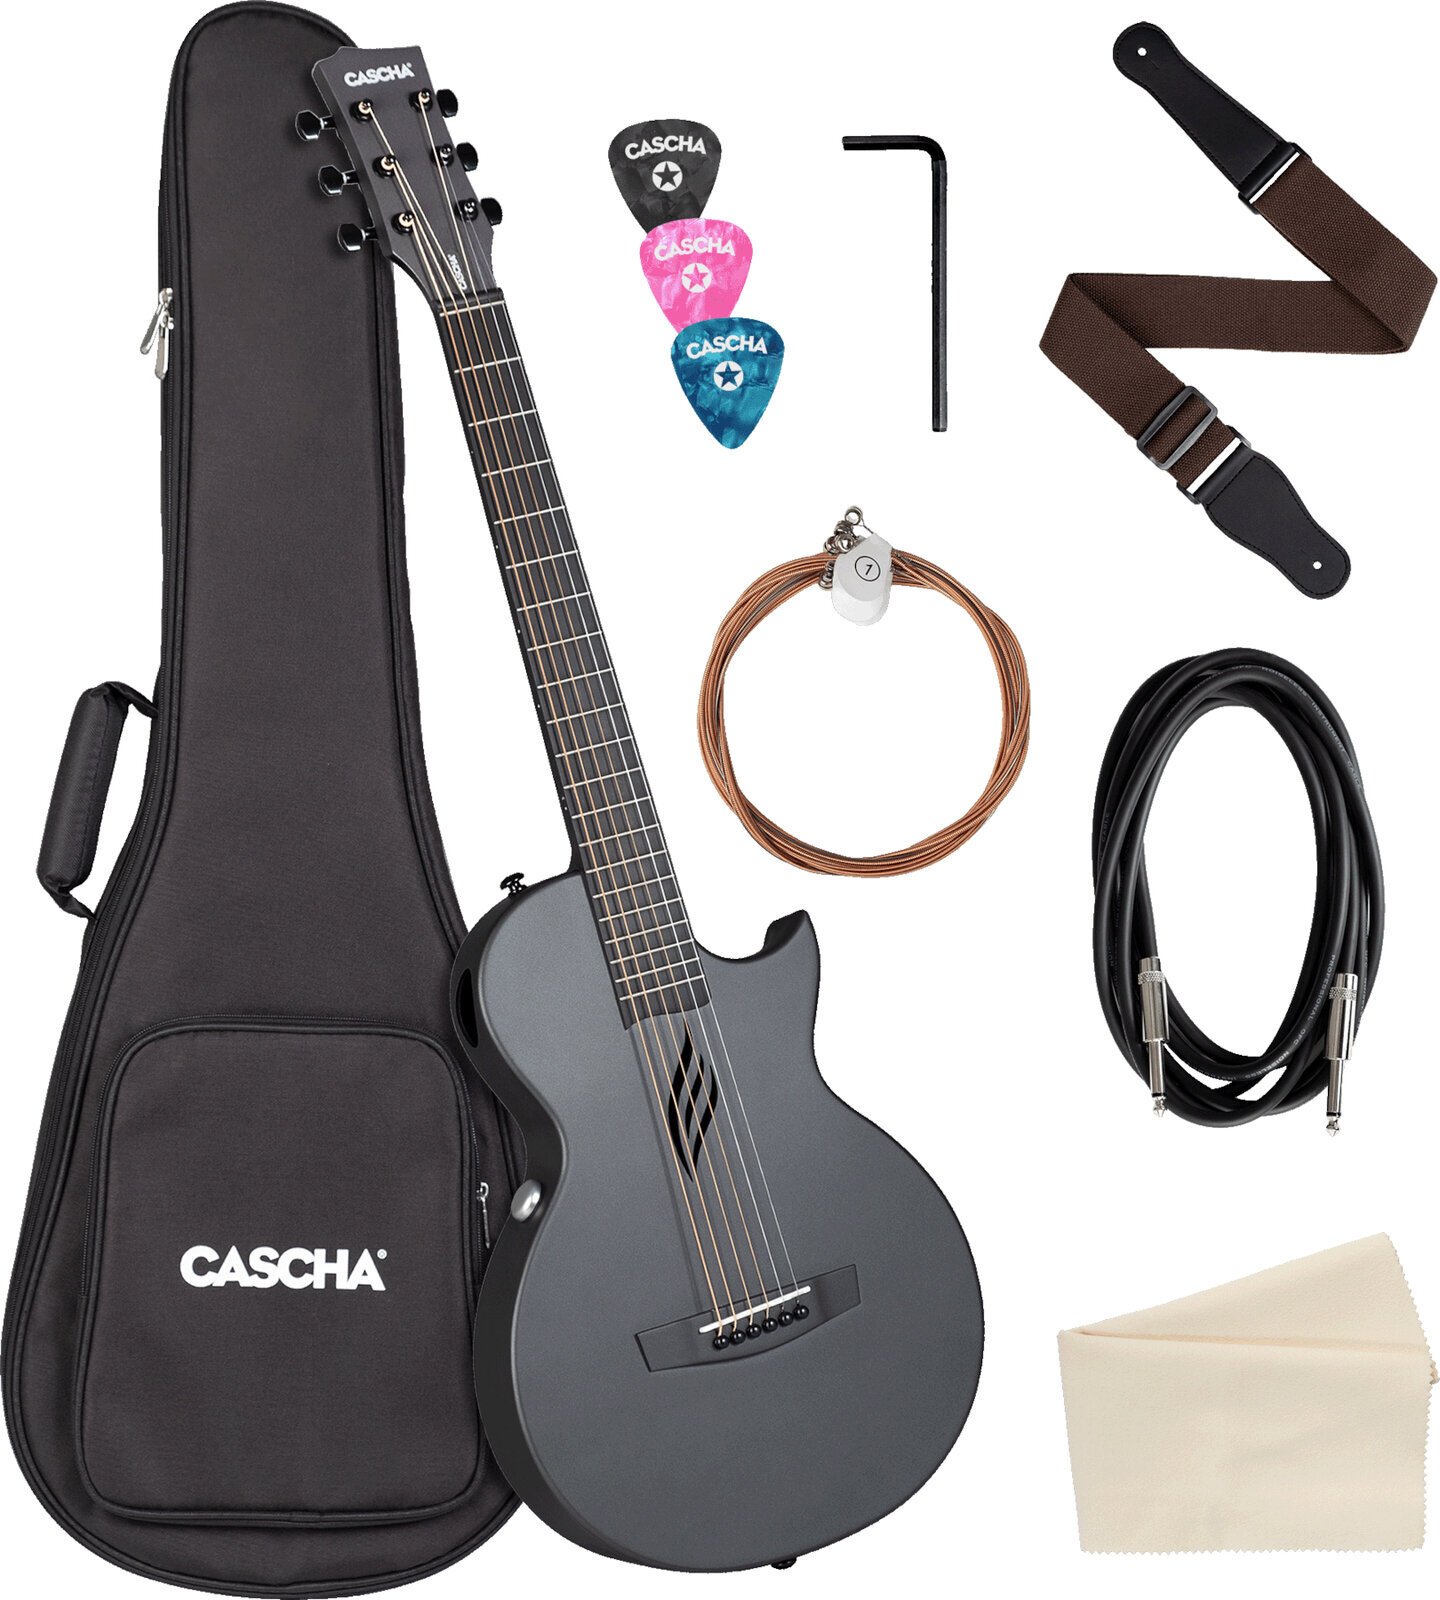 Special elektroakustinen kitara Cascha Carbon Fibre Electric Acoustic Guitar Black Matte